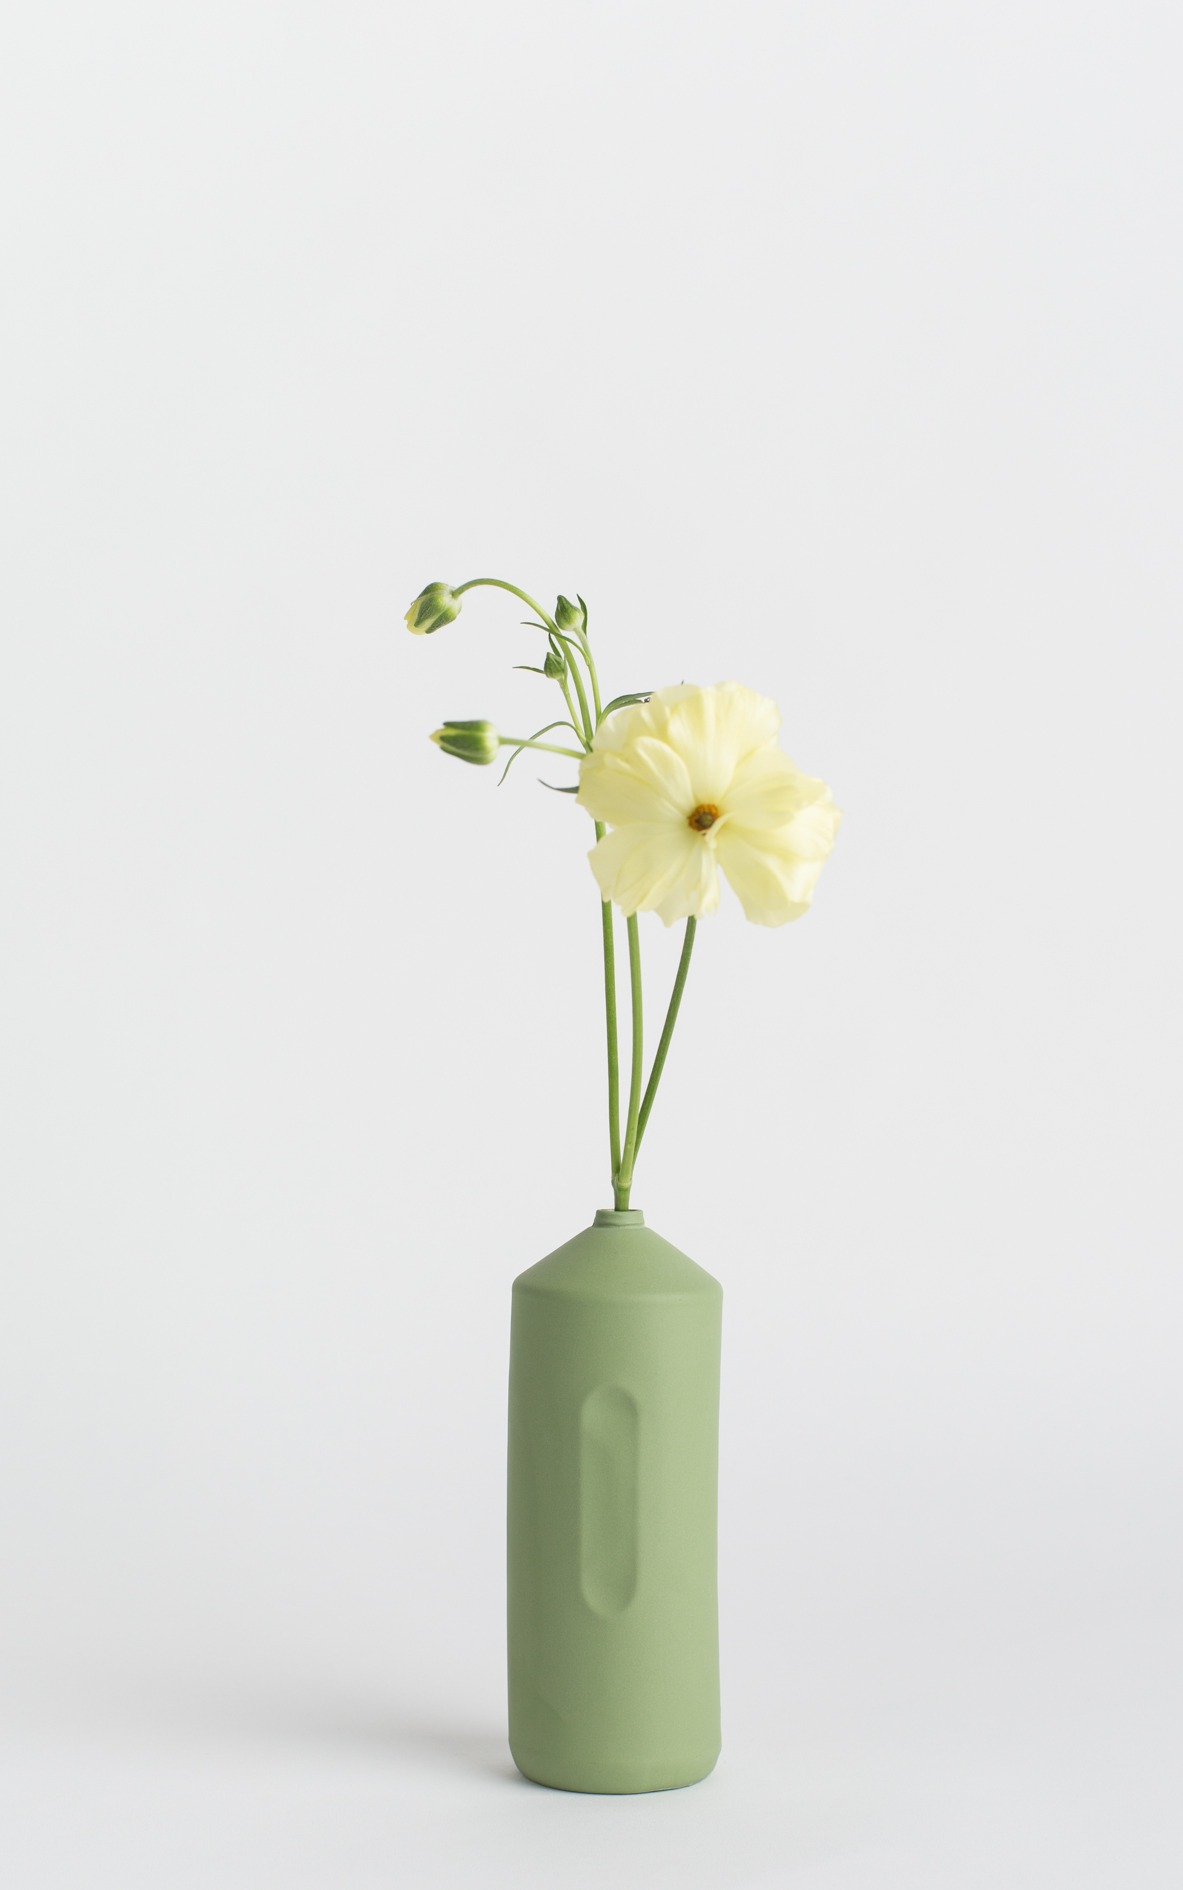 bottle vase #2 dark green with flower